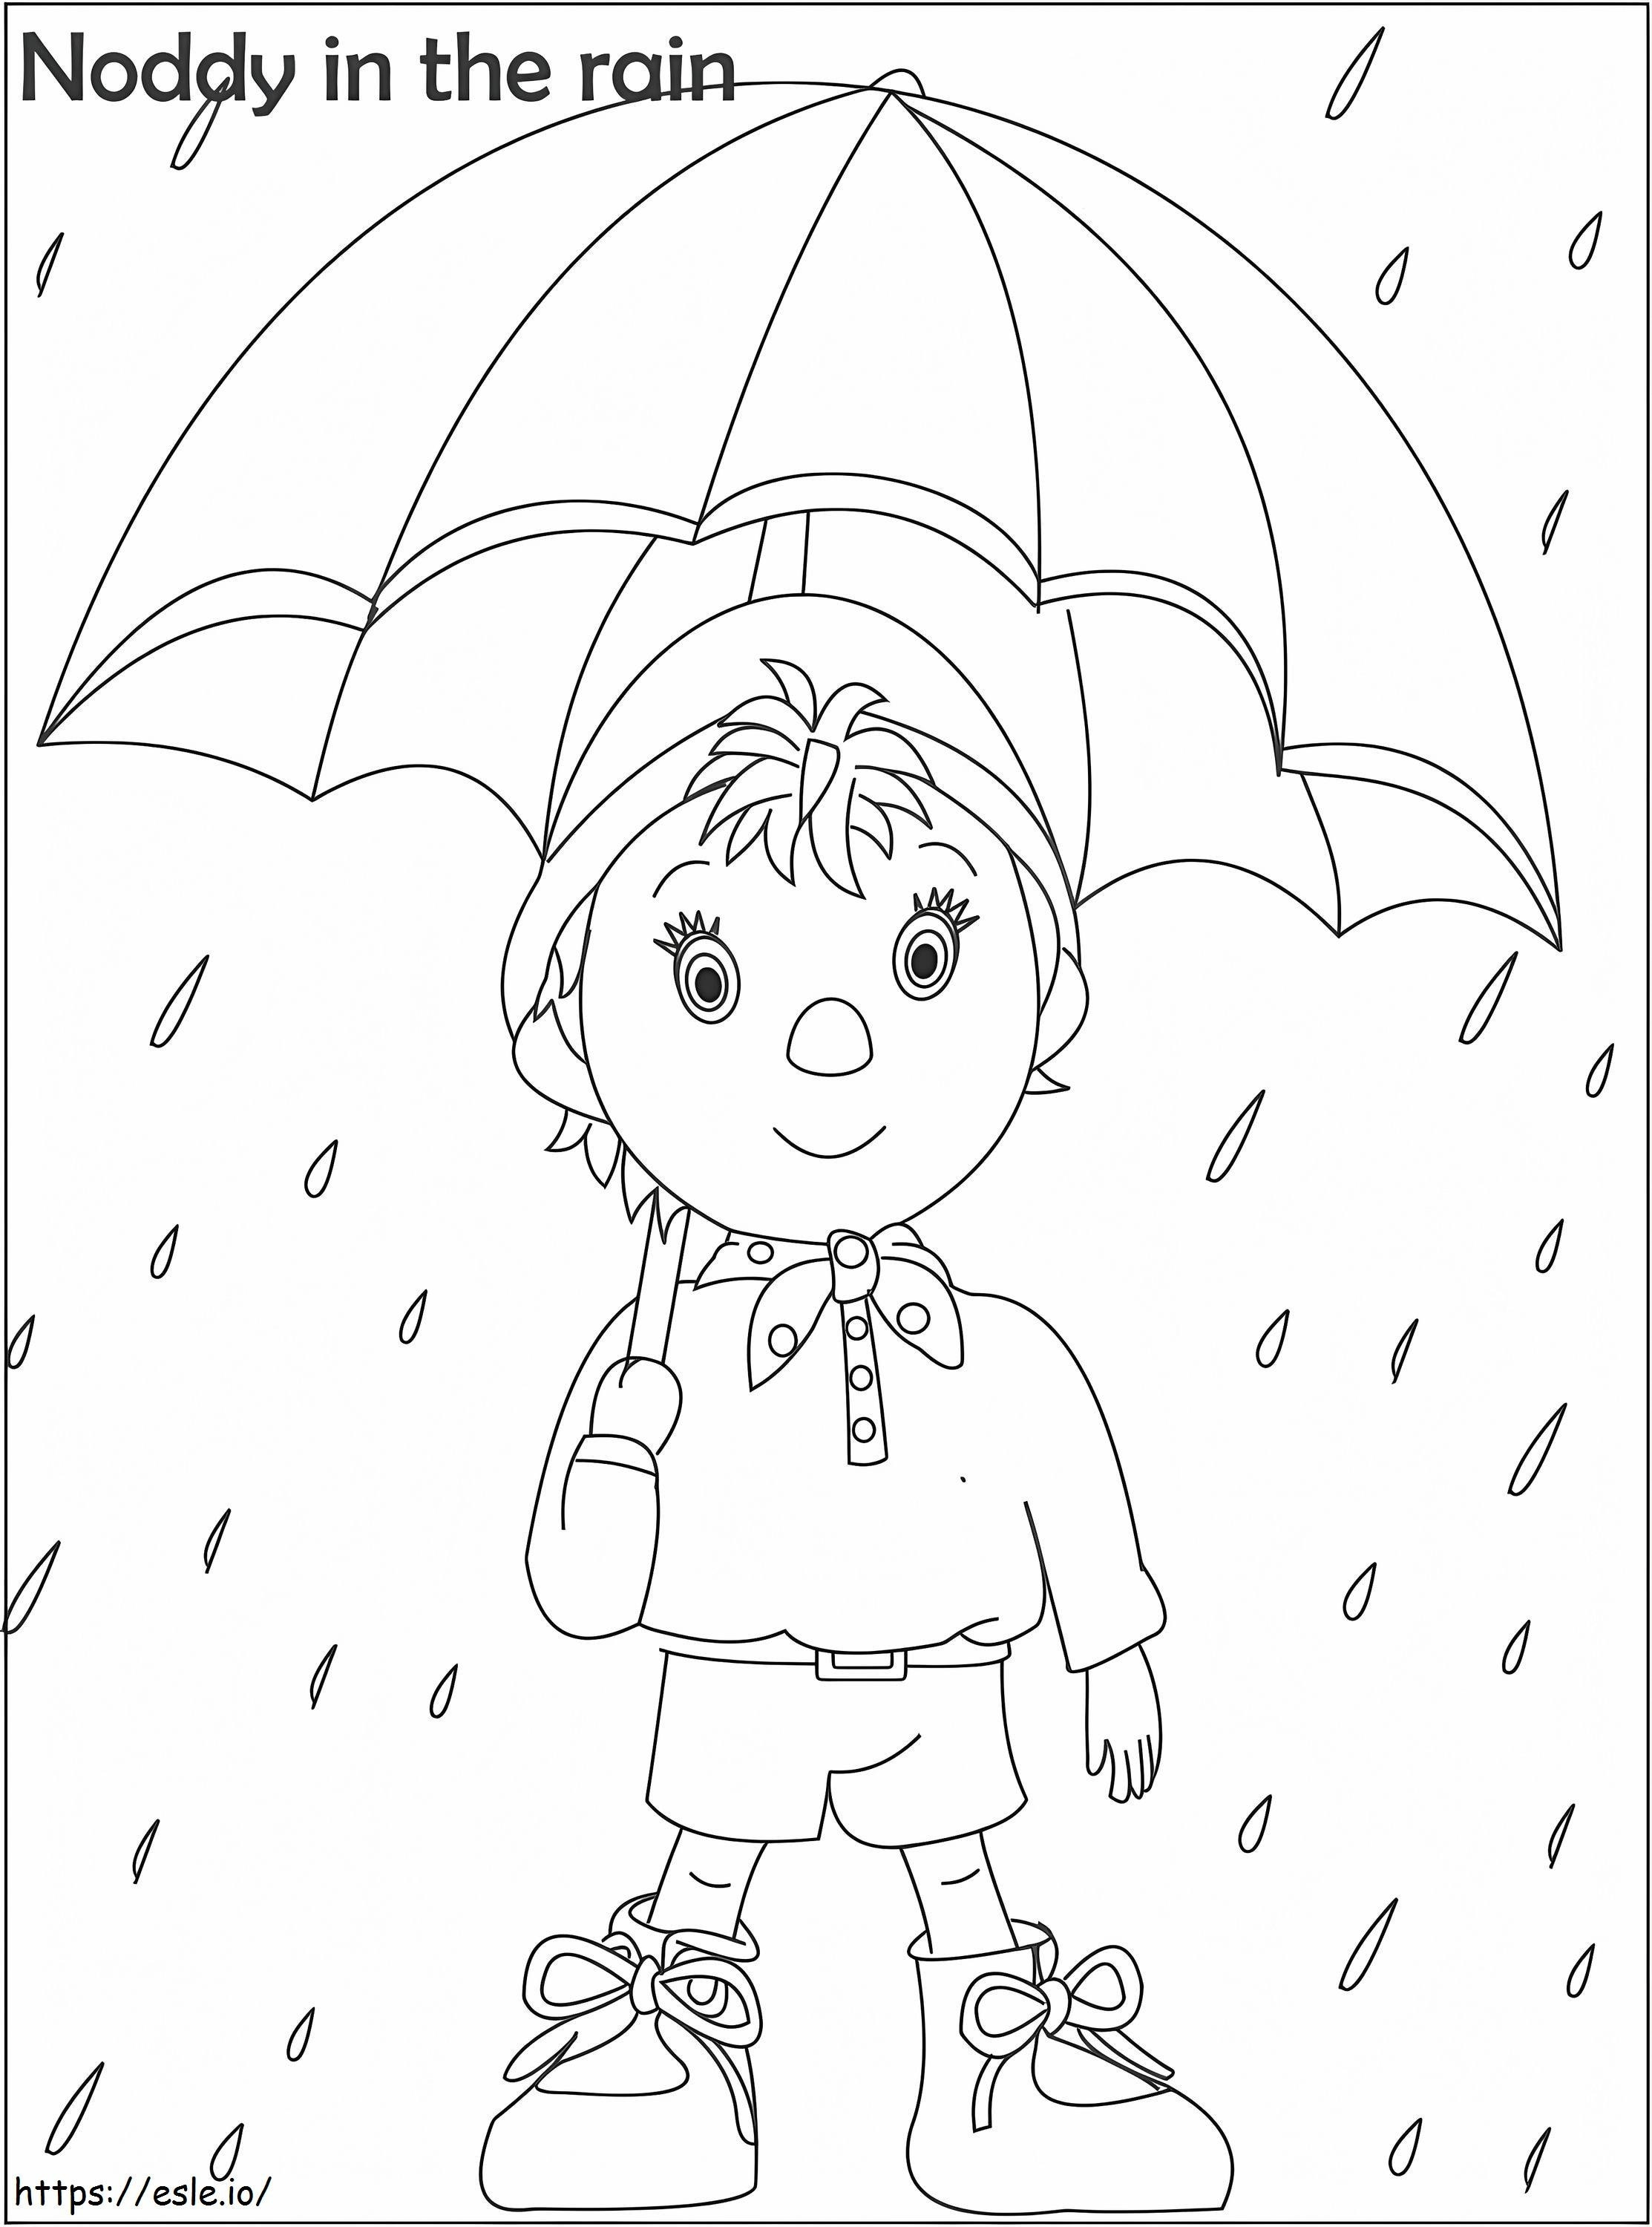 1586766140 Drawing Rain 44 coloring page